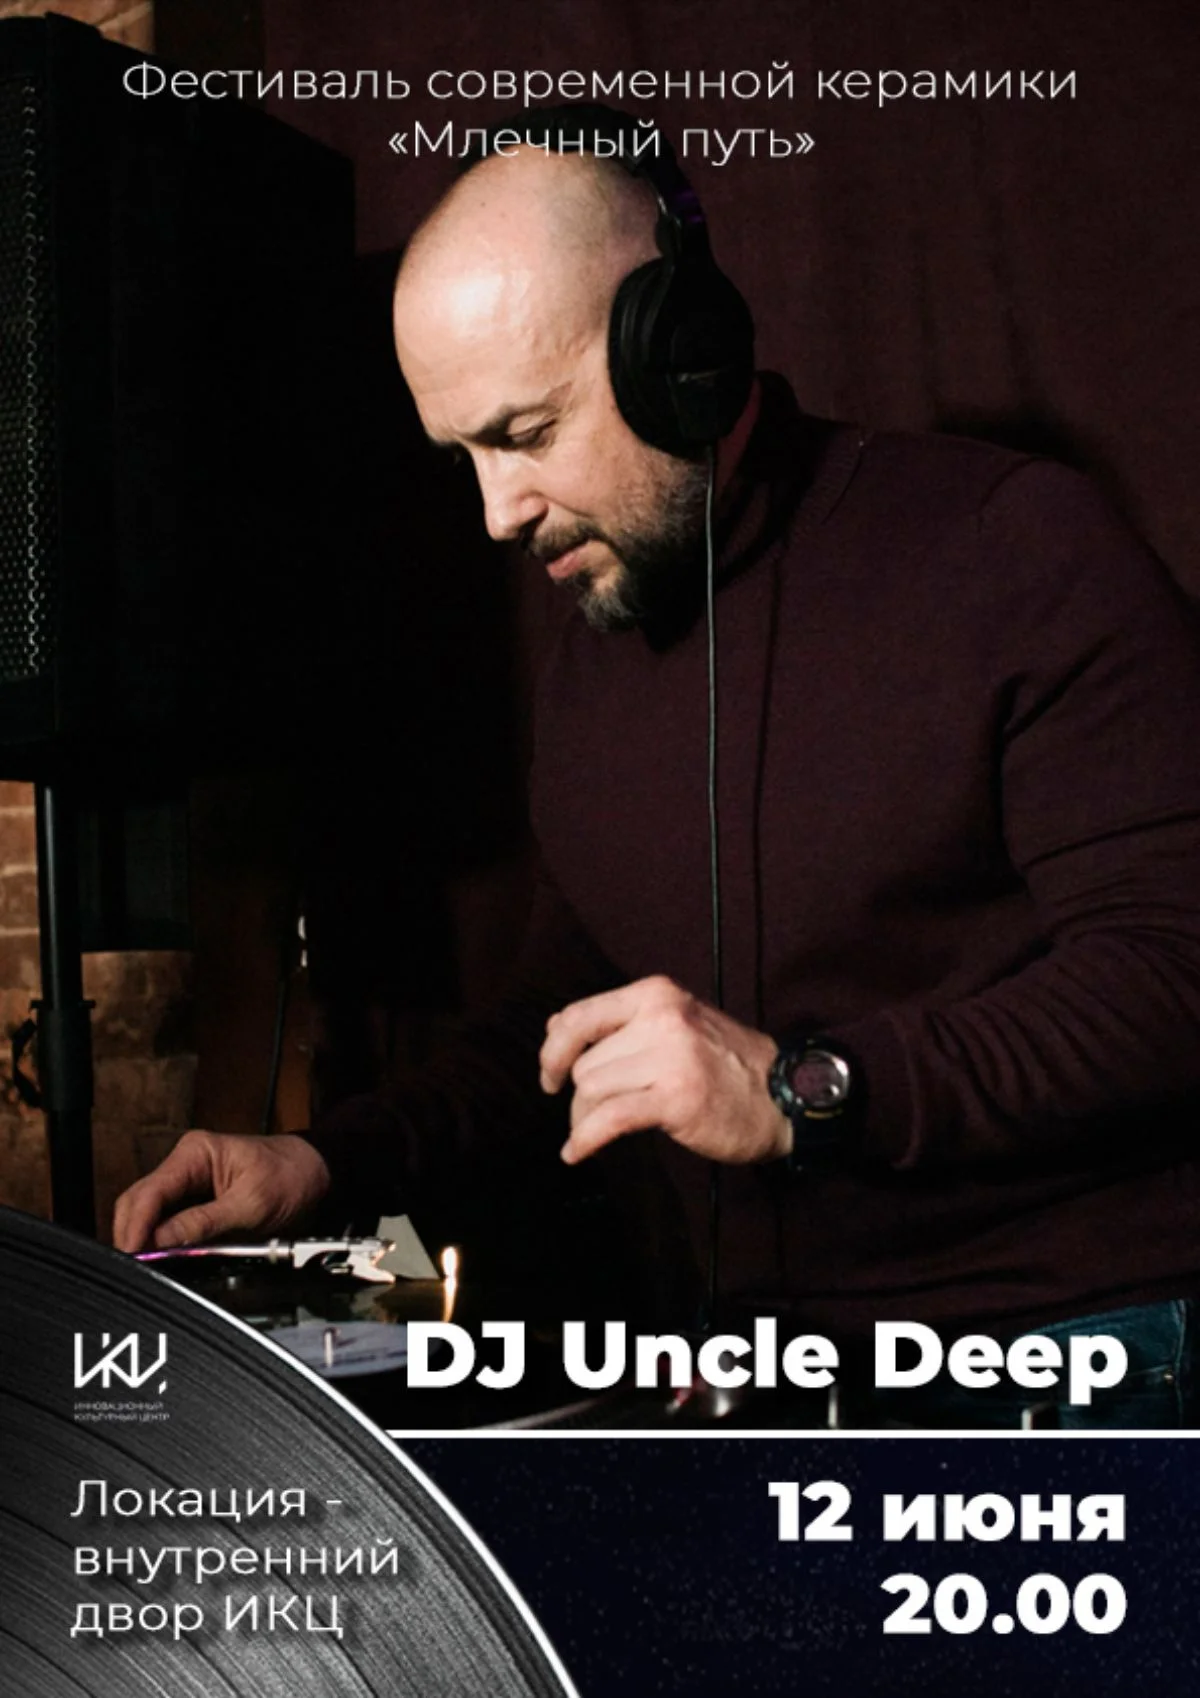 DJ Uncle Deep